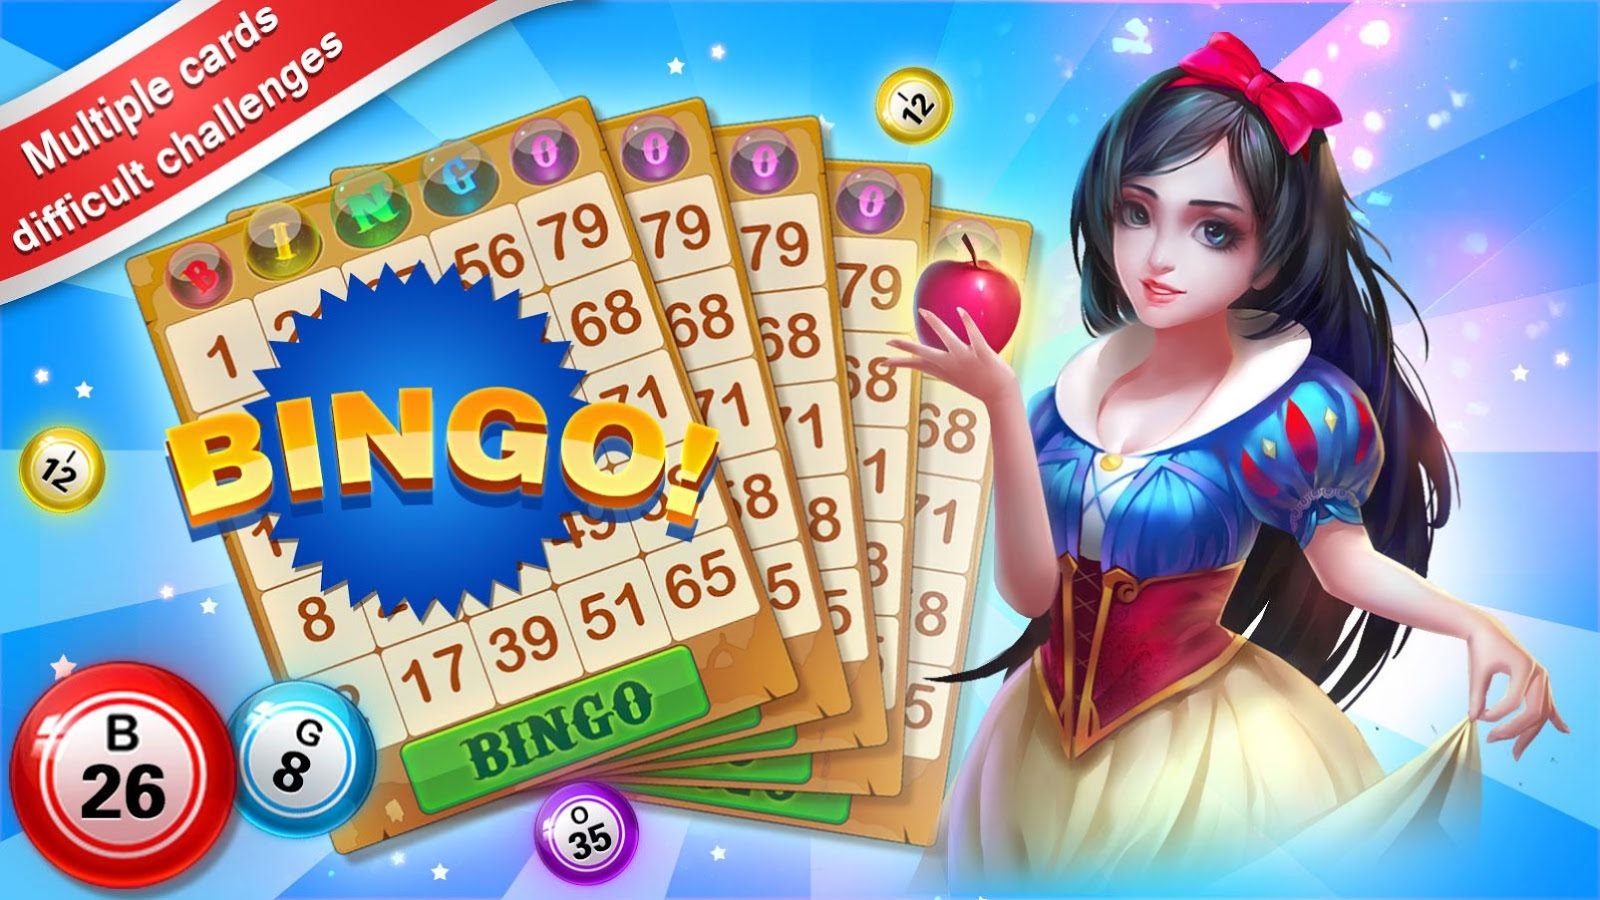 The Bingo: Latest New Sites Gaming